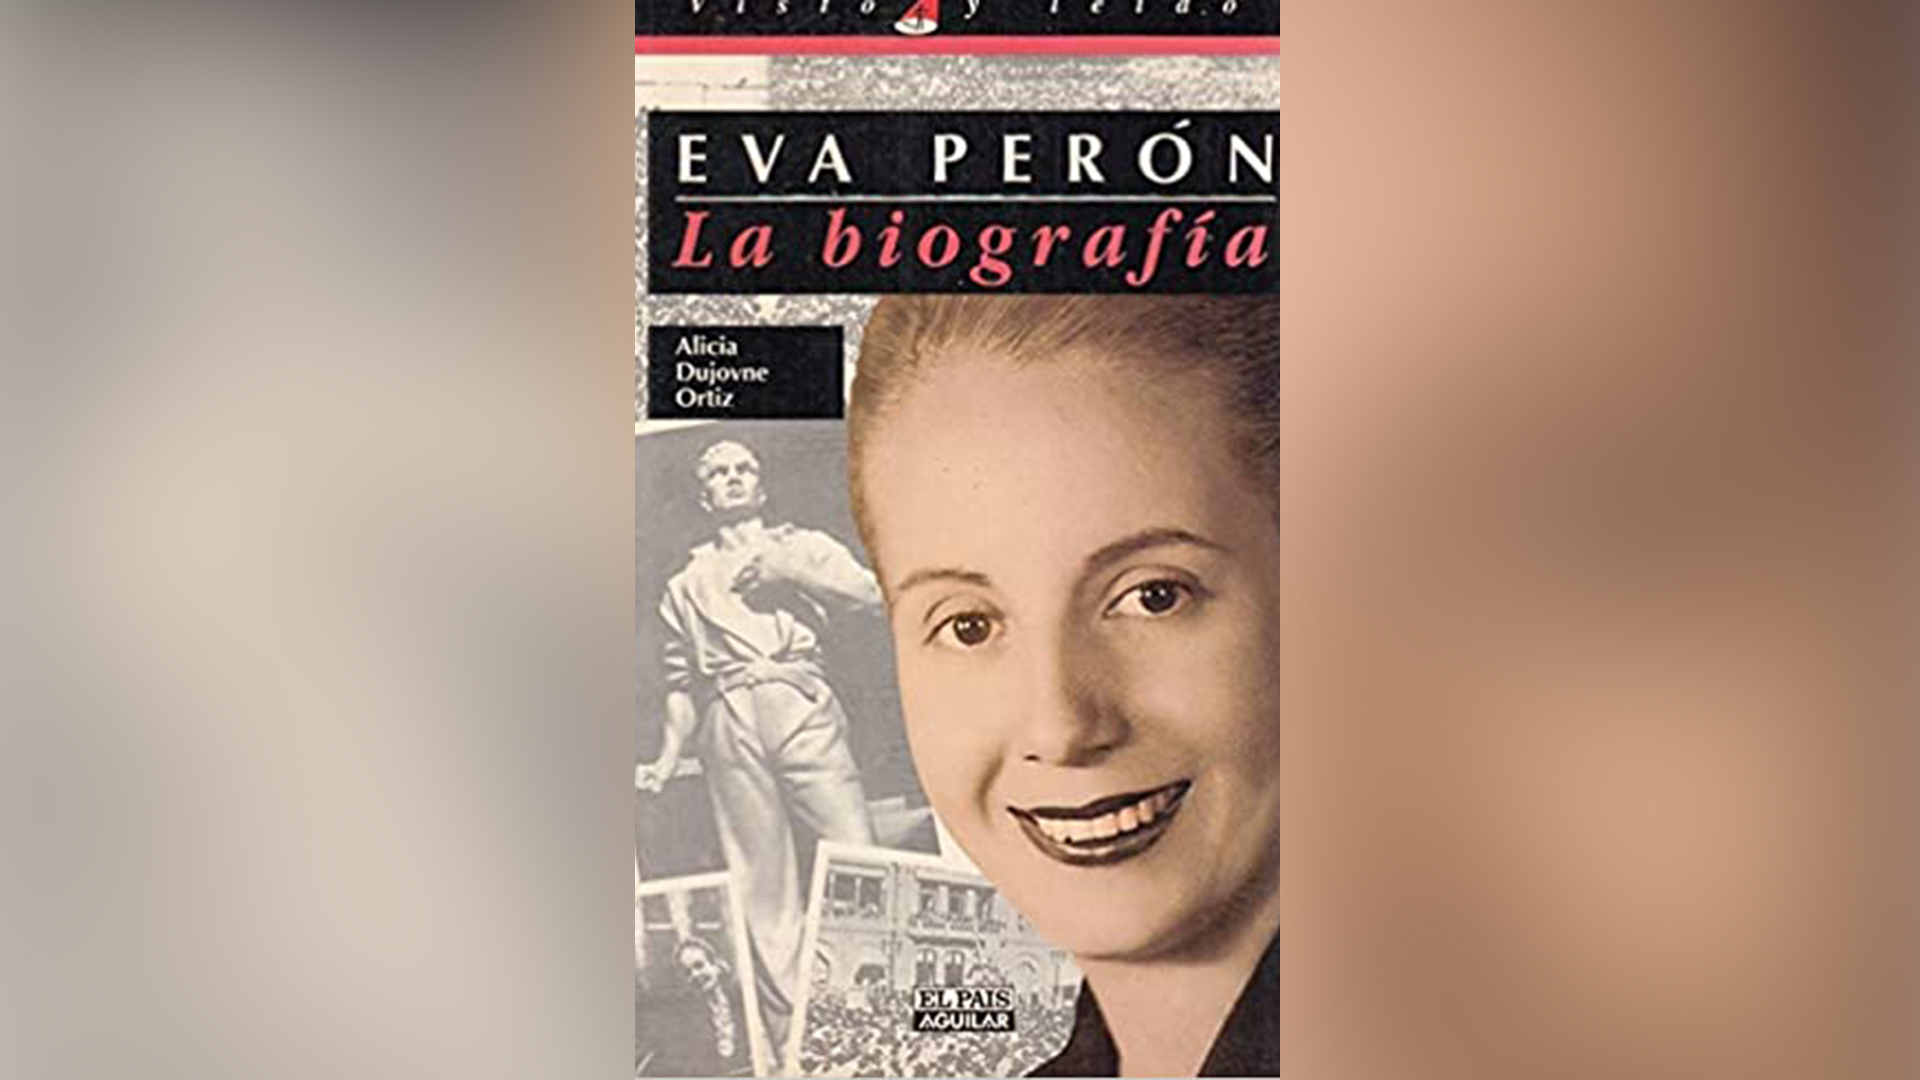 “Eva Perón. La biografía”, de Alicia Dujovne Ortiz.